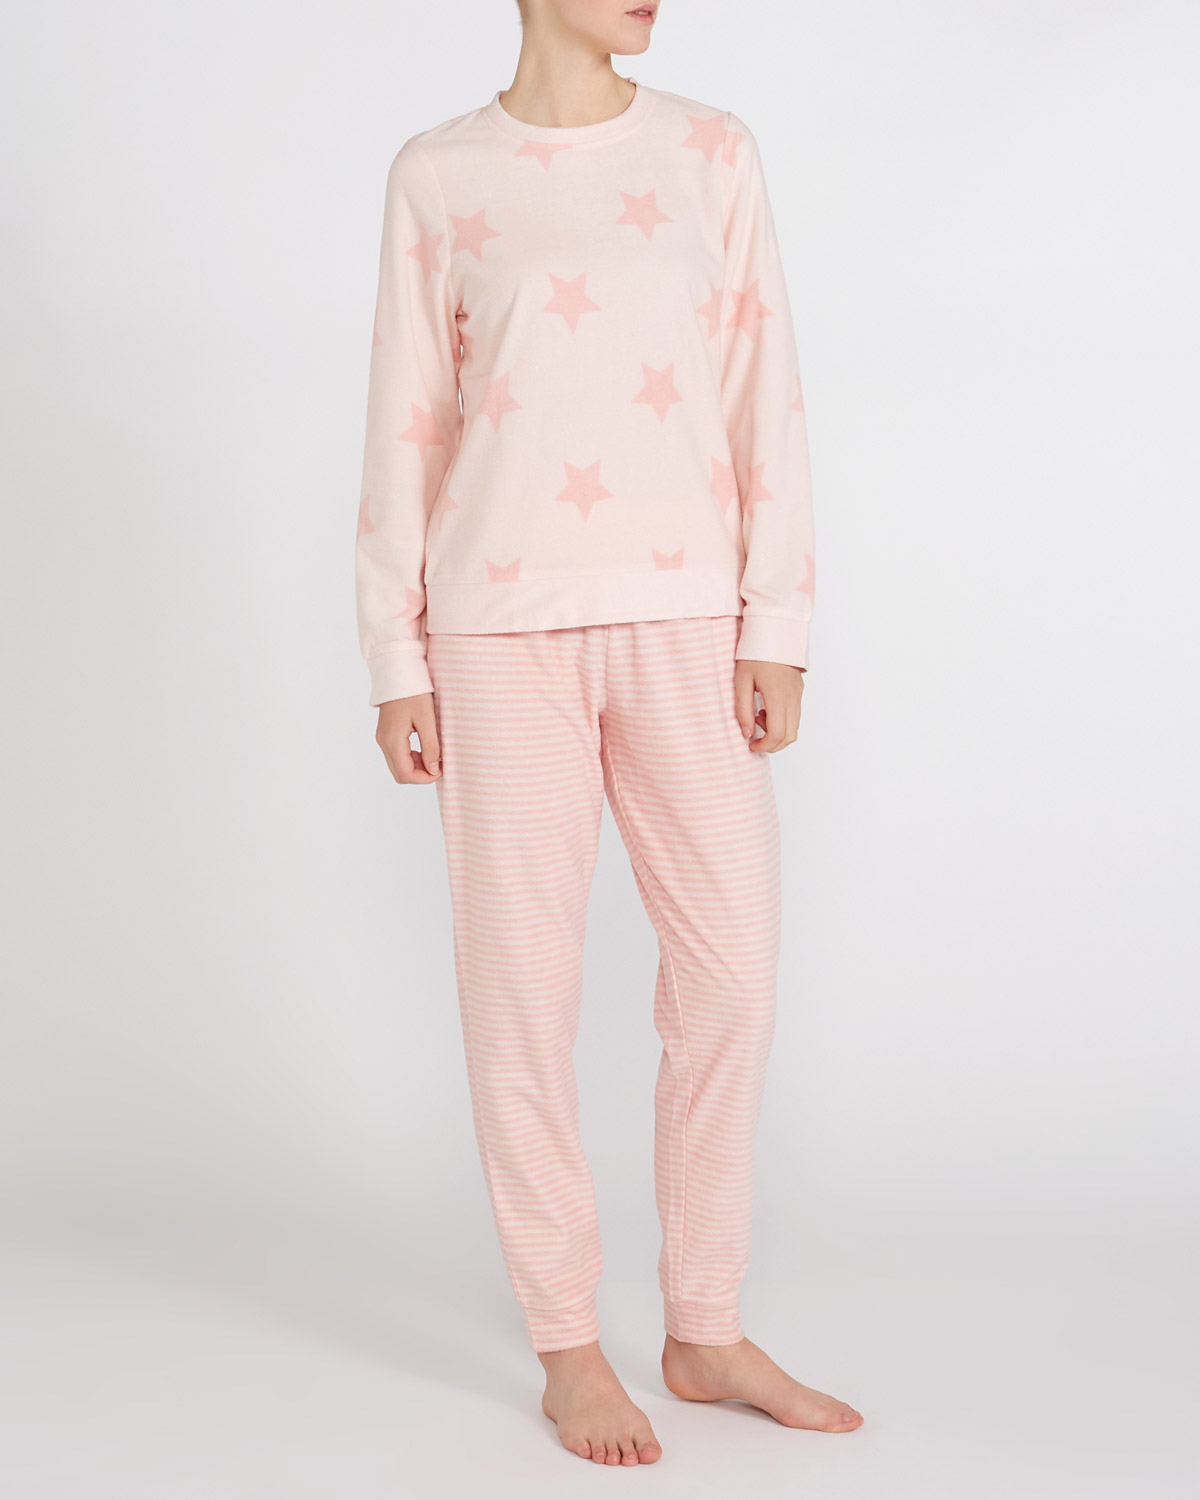 Dunnes Stores  Star Fluffy Fleece Pyjamas Set